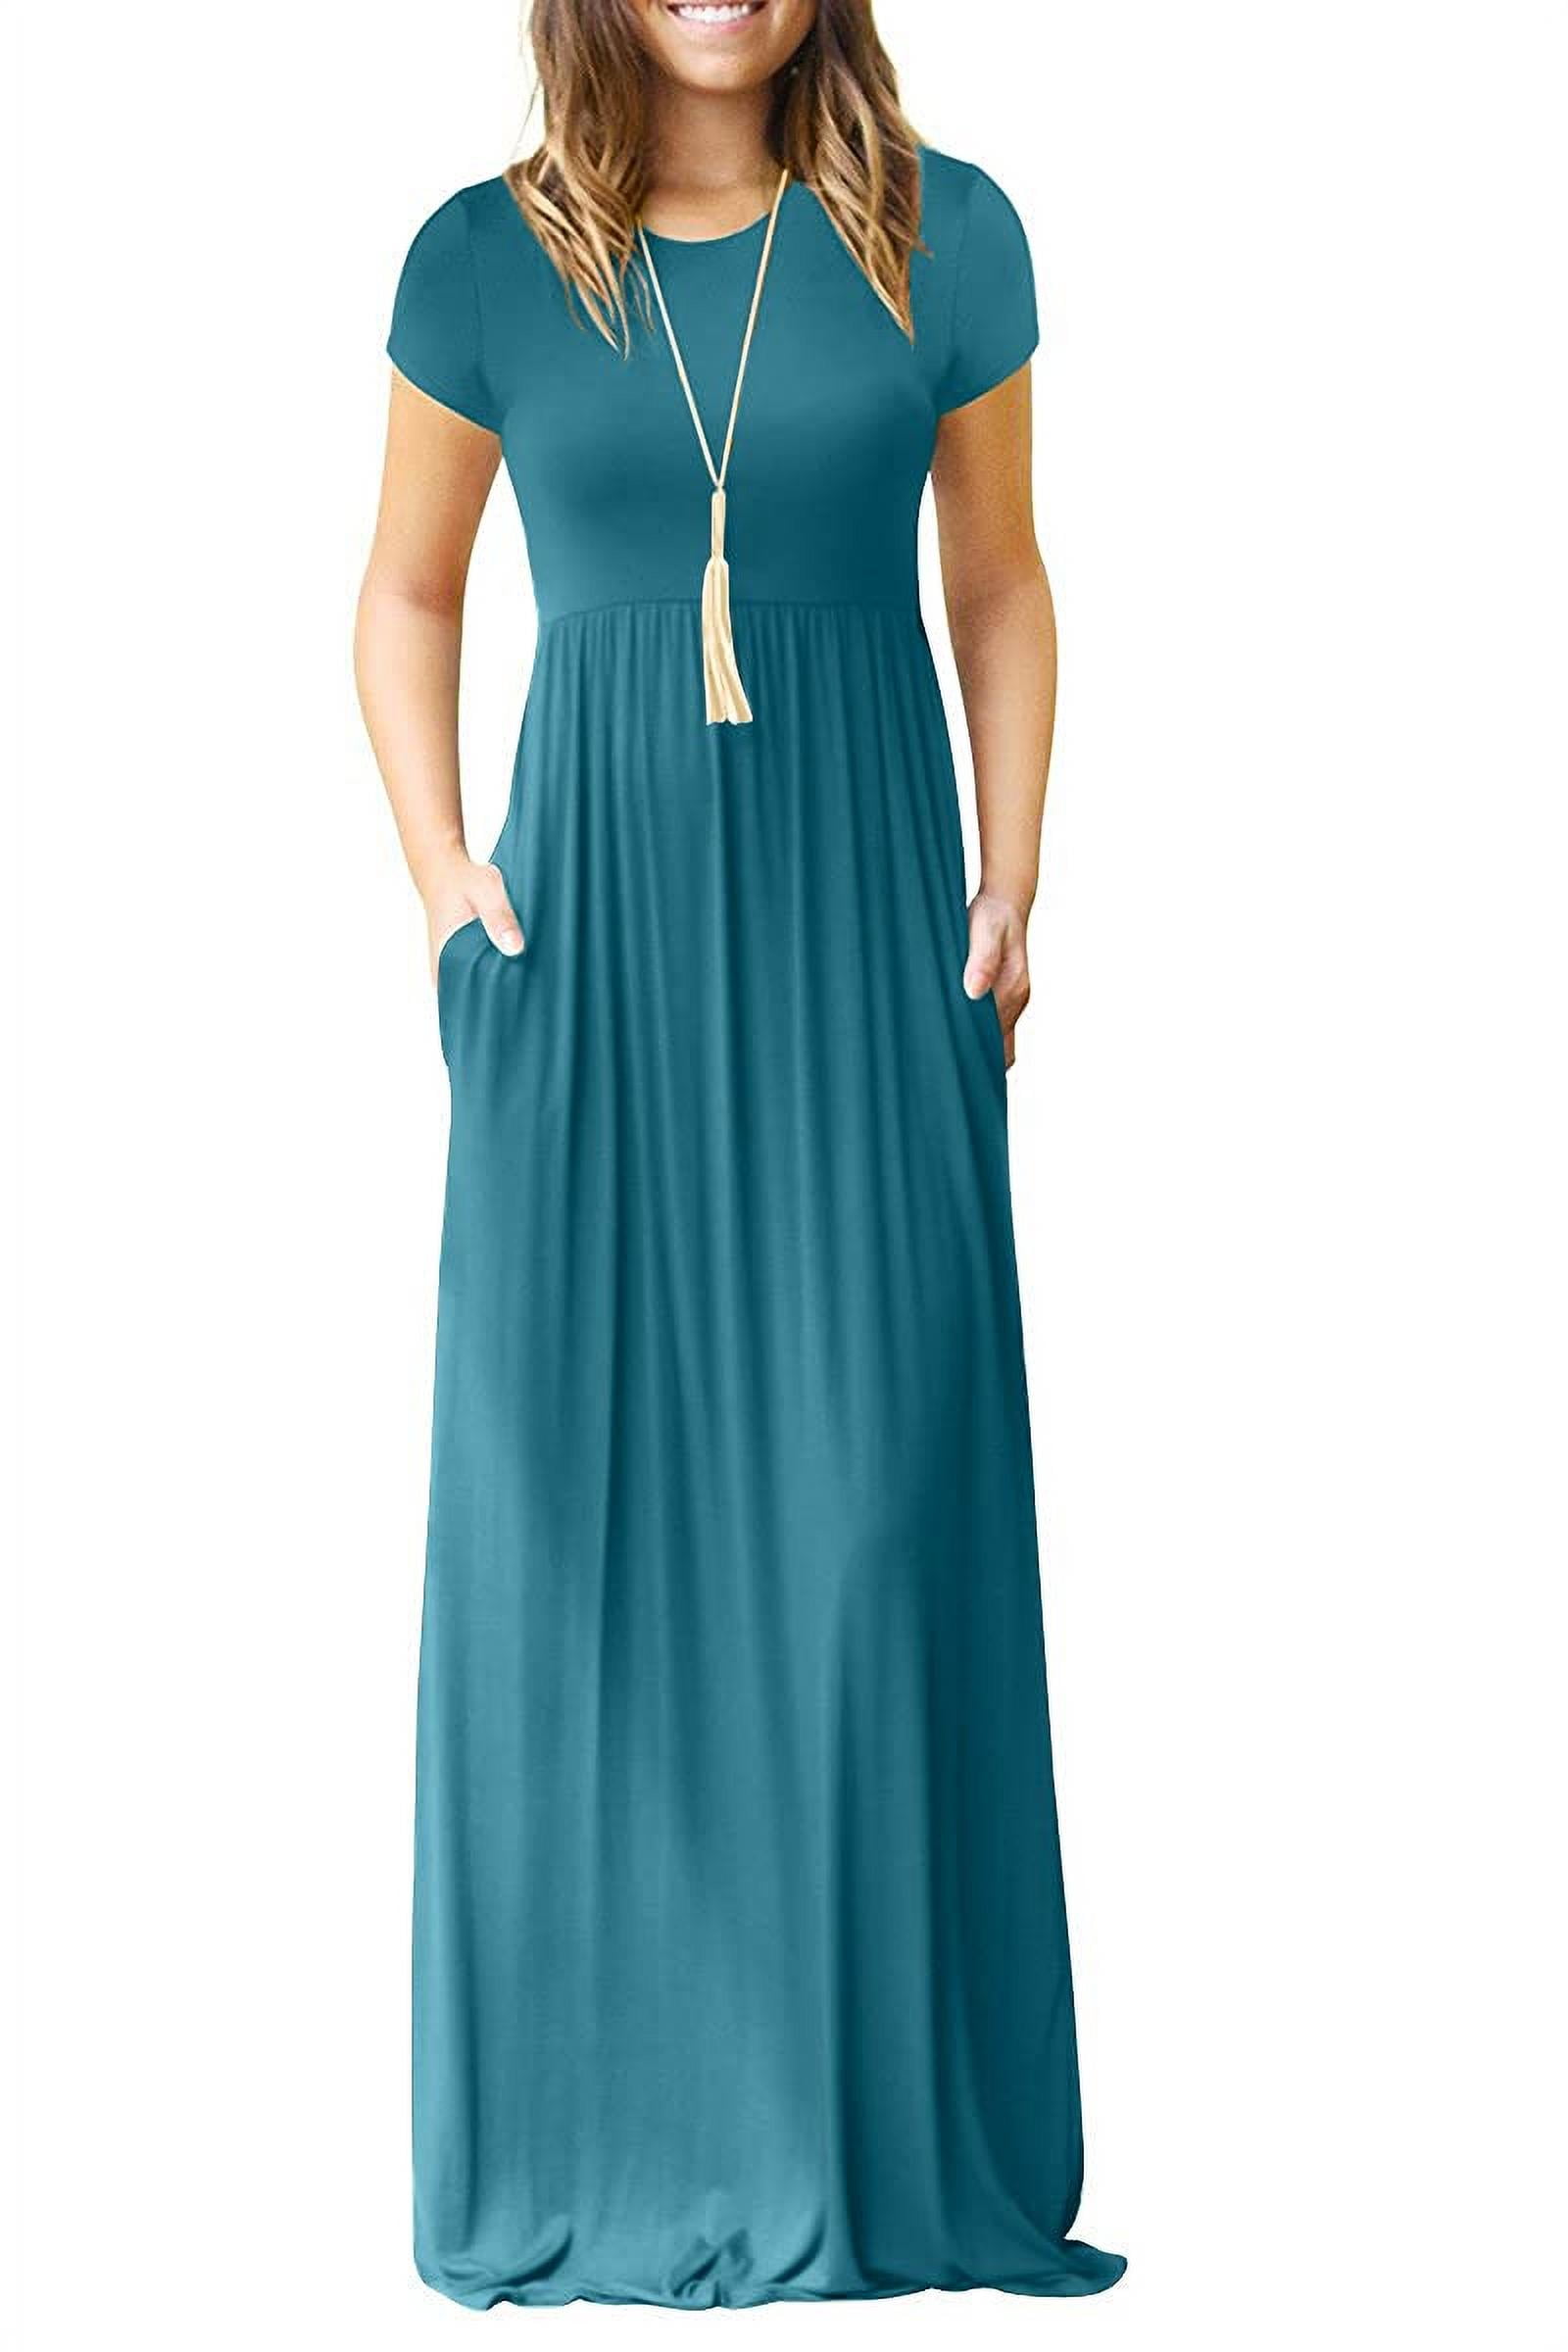 HAOMEILI Women Short/Long Sleeve Loose Plain Maxi Dresses Casual Long ...